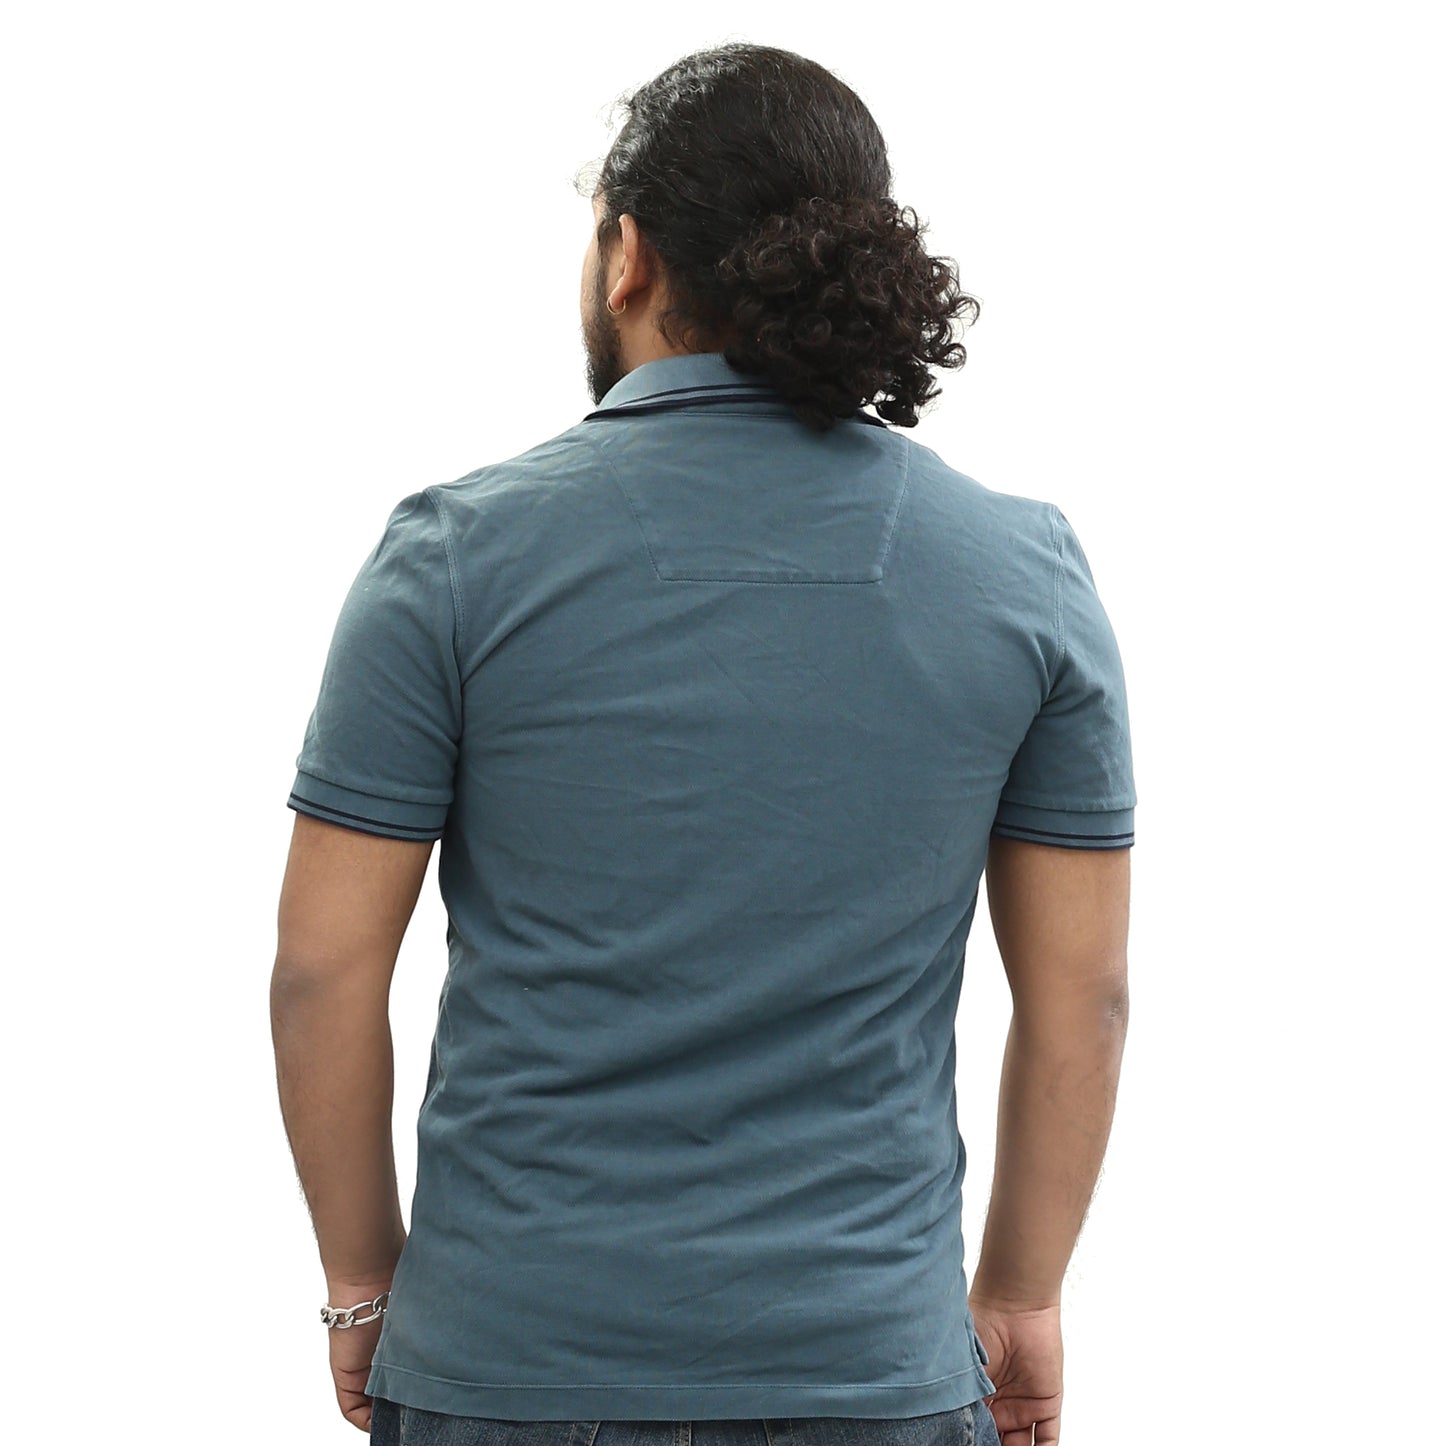 Napapijri Solid Men's Polo Short Sleeve Cotton T-Shirt